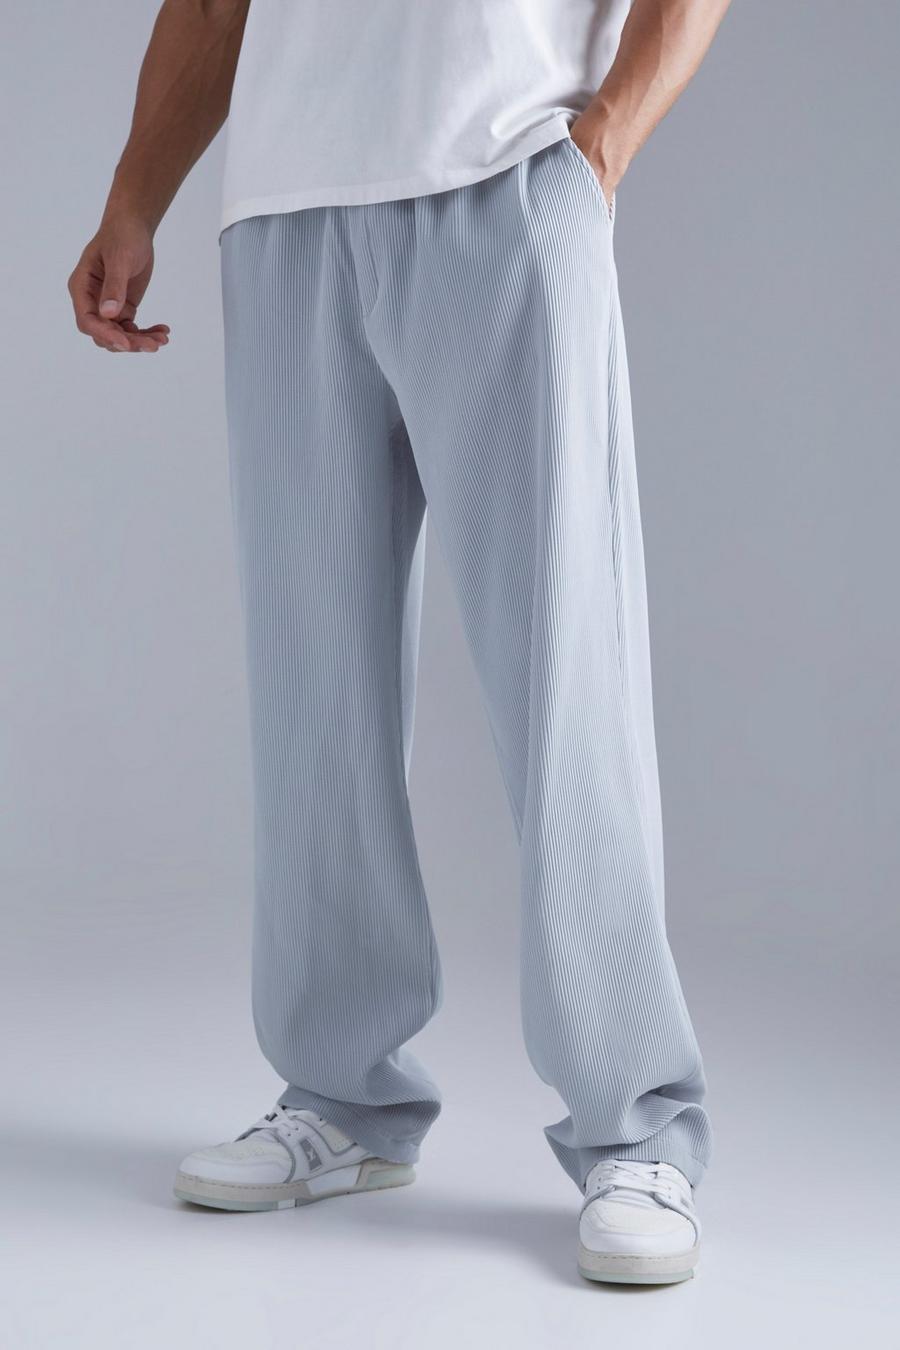 Tall - Pantalon décontracté plissé, Light grey